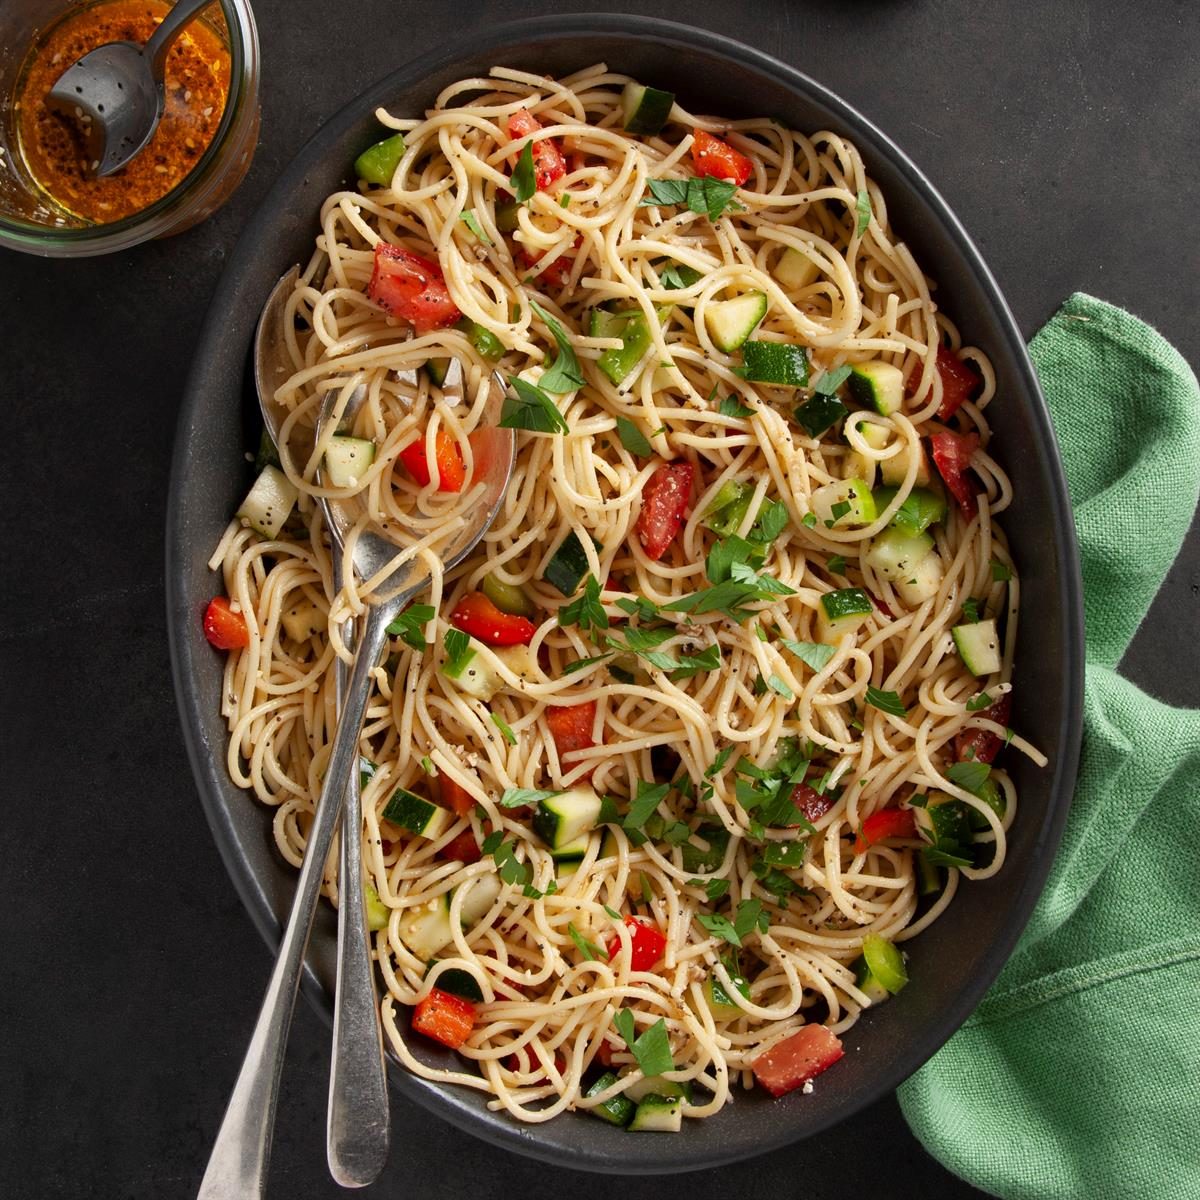 Spaghetti Salad Recipe: How to Make It